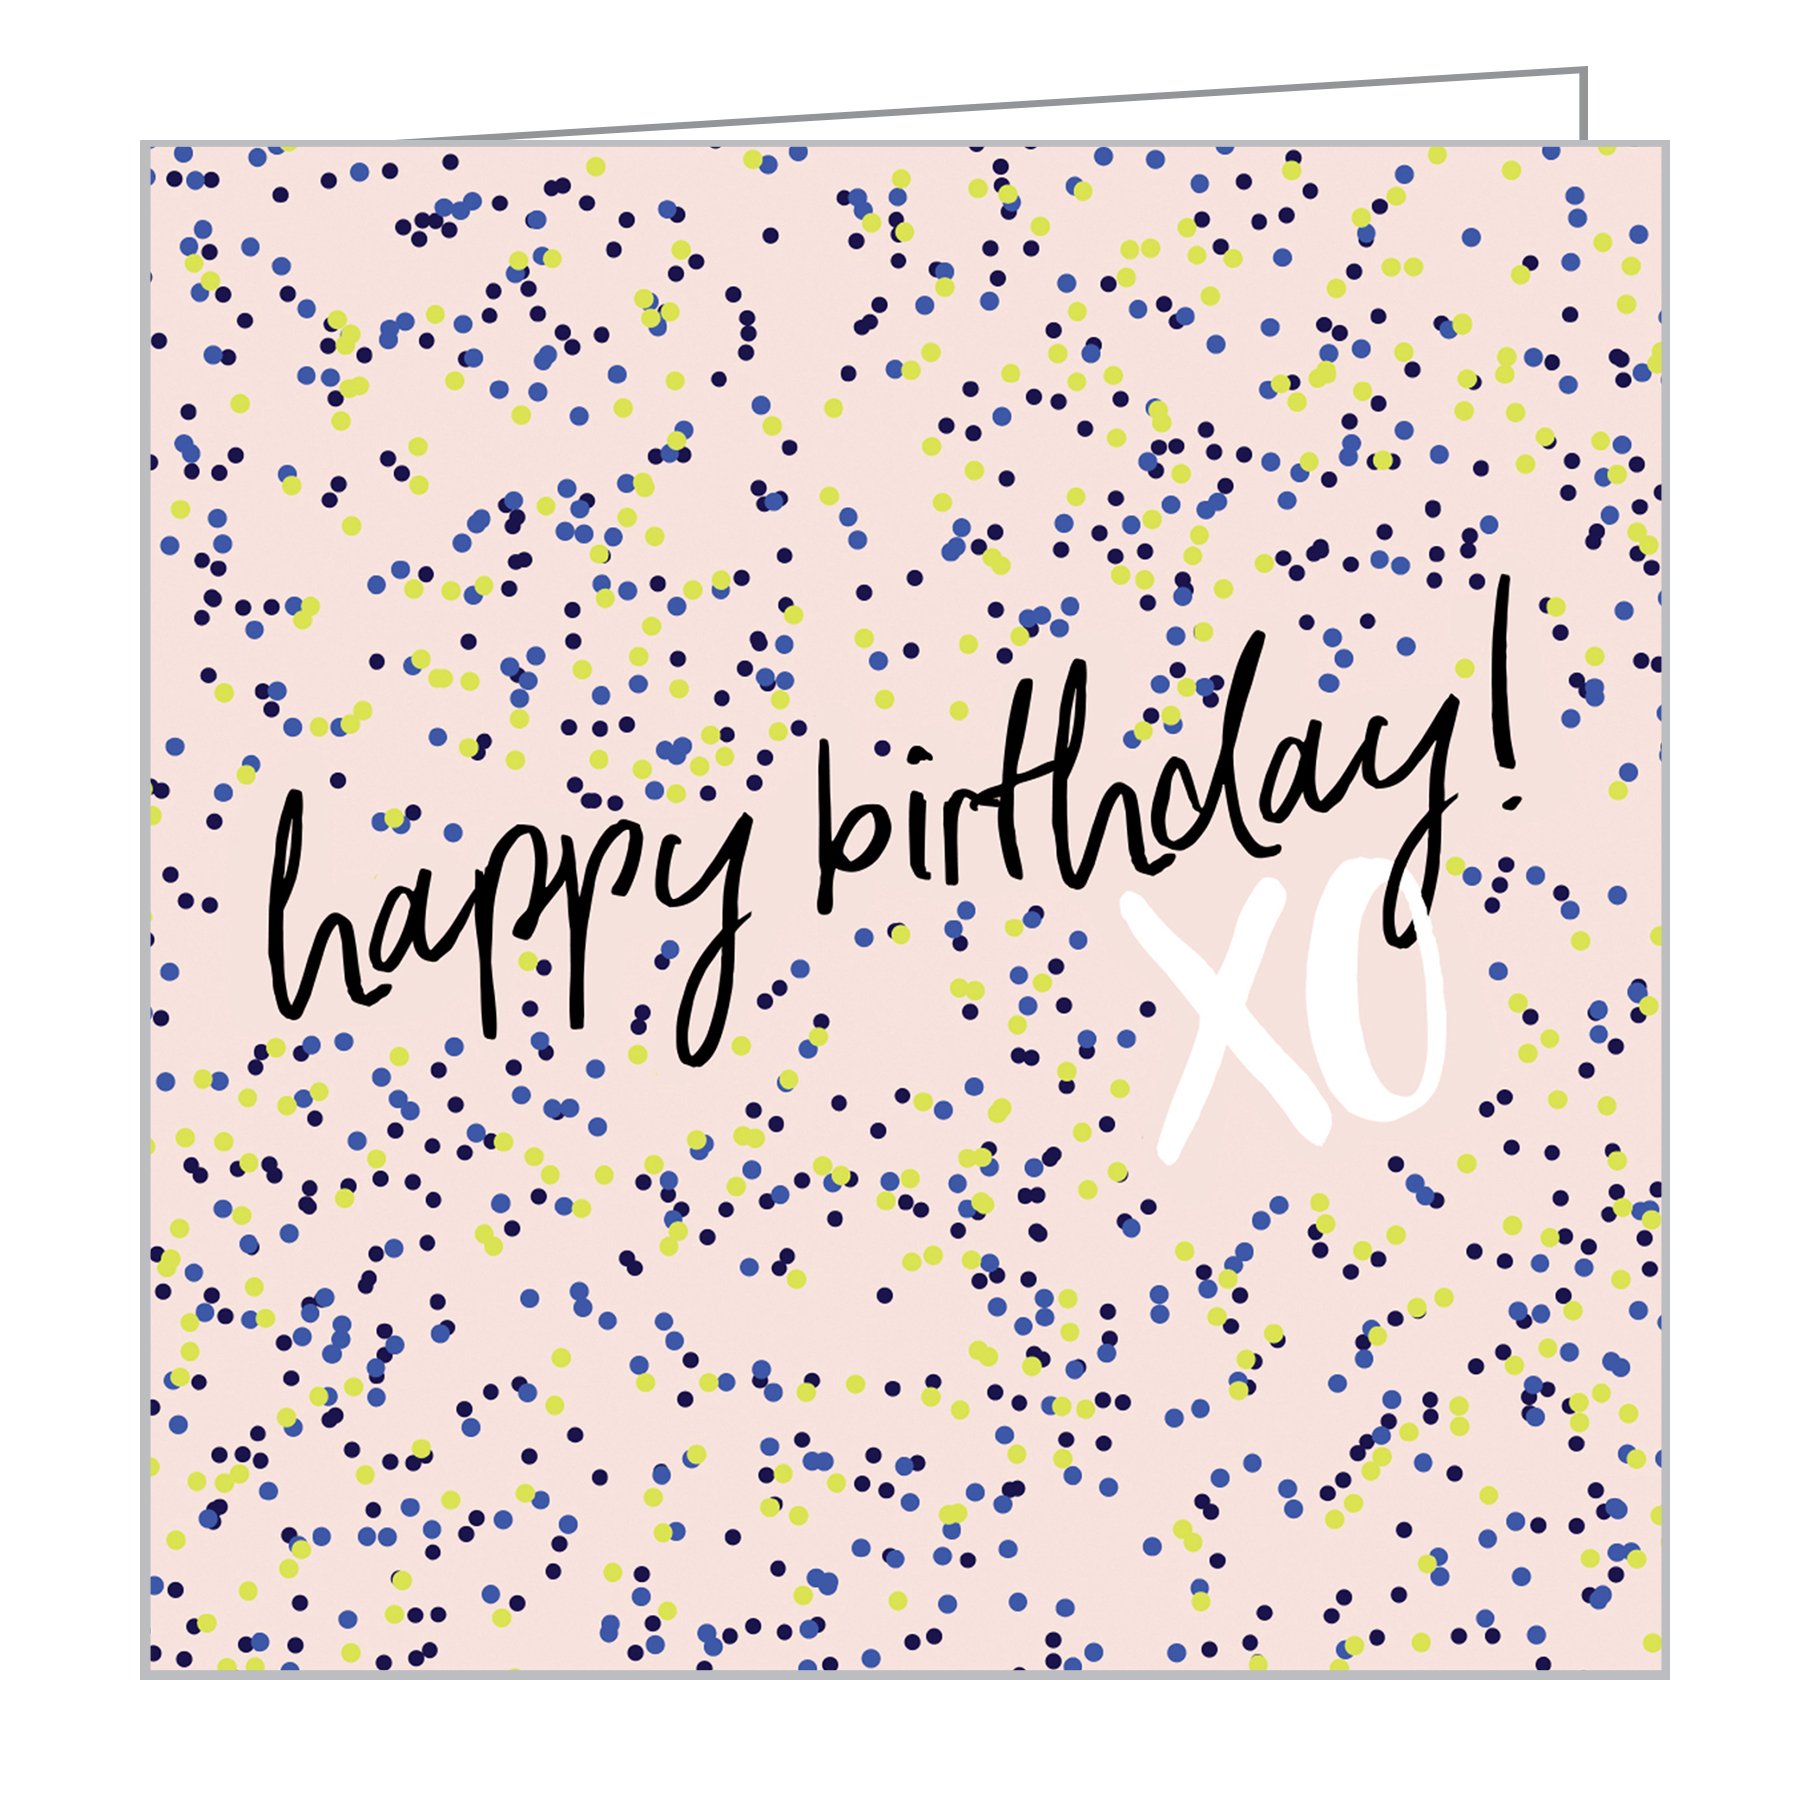 Studio Proba’s metallic design on 'Happy Birthday' notecard, by teNeues Stationery.